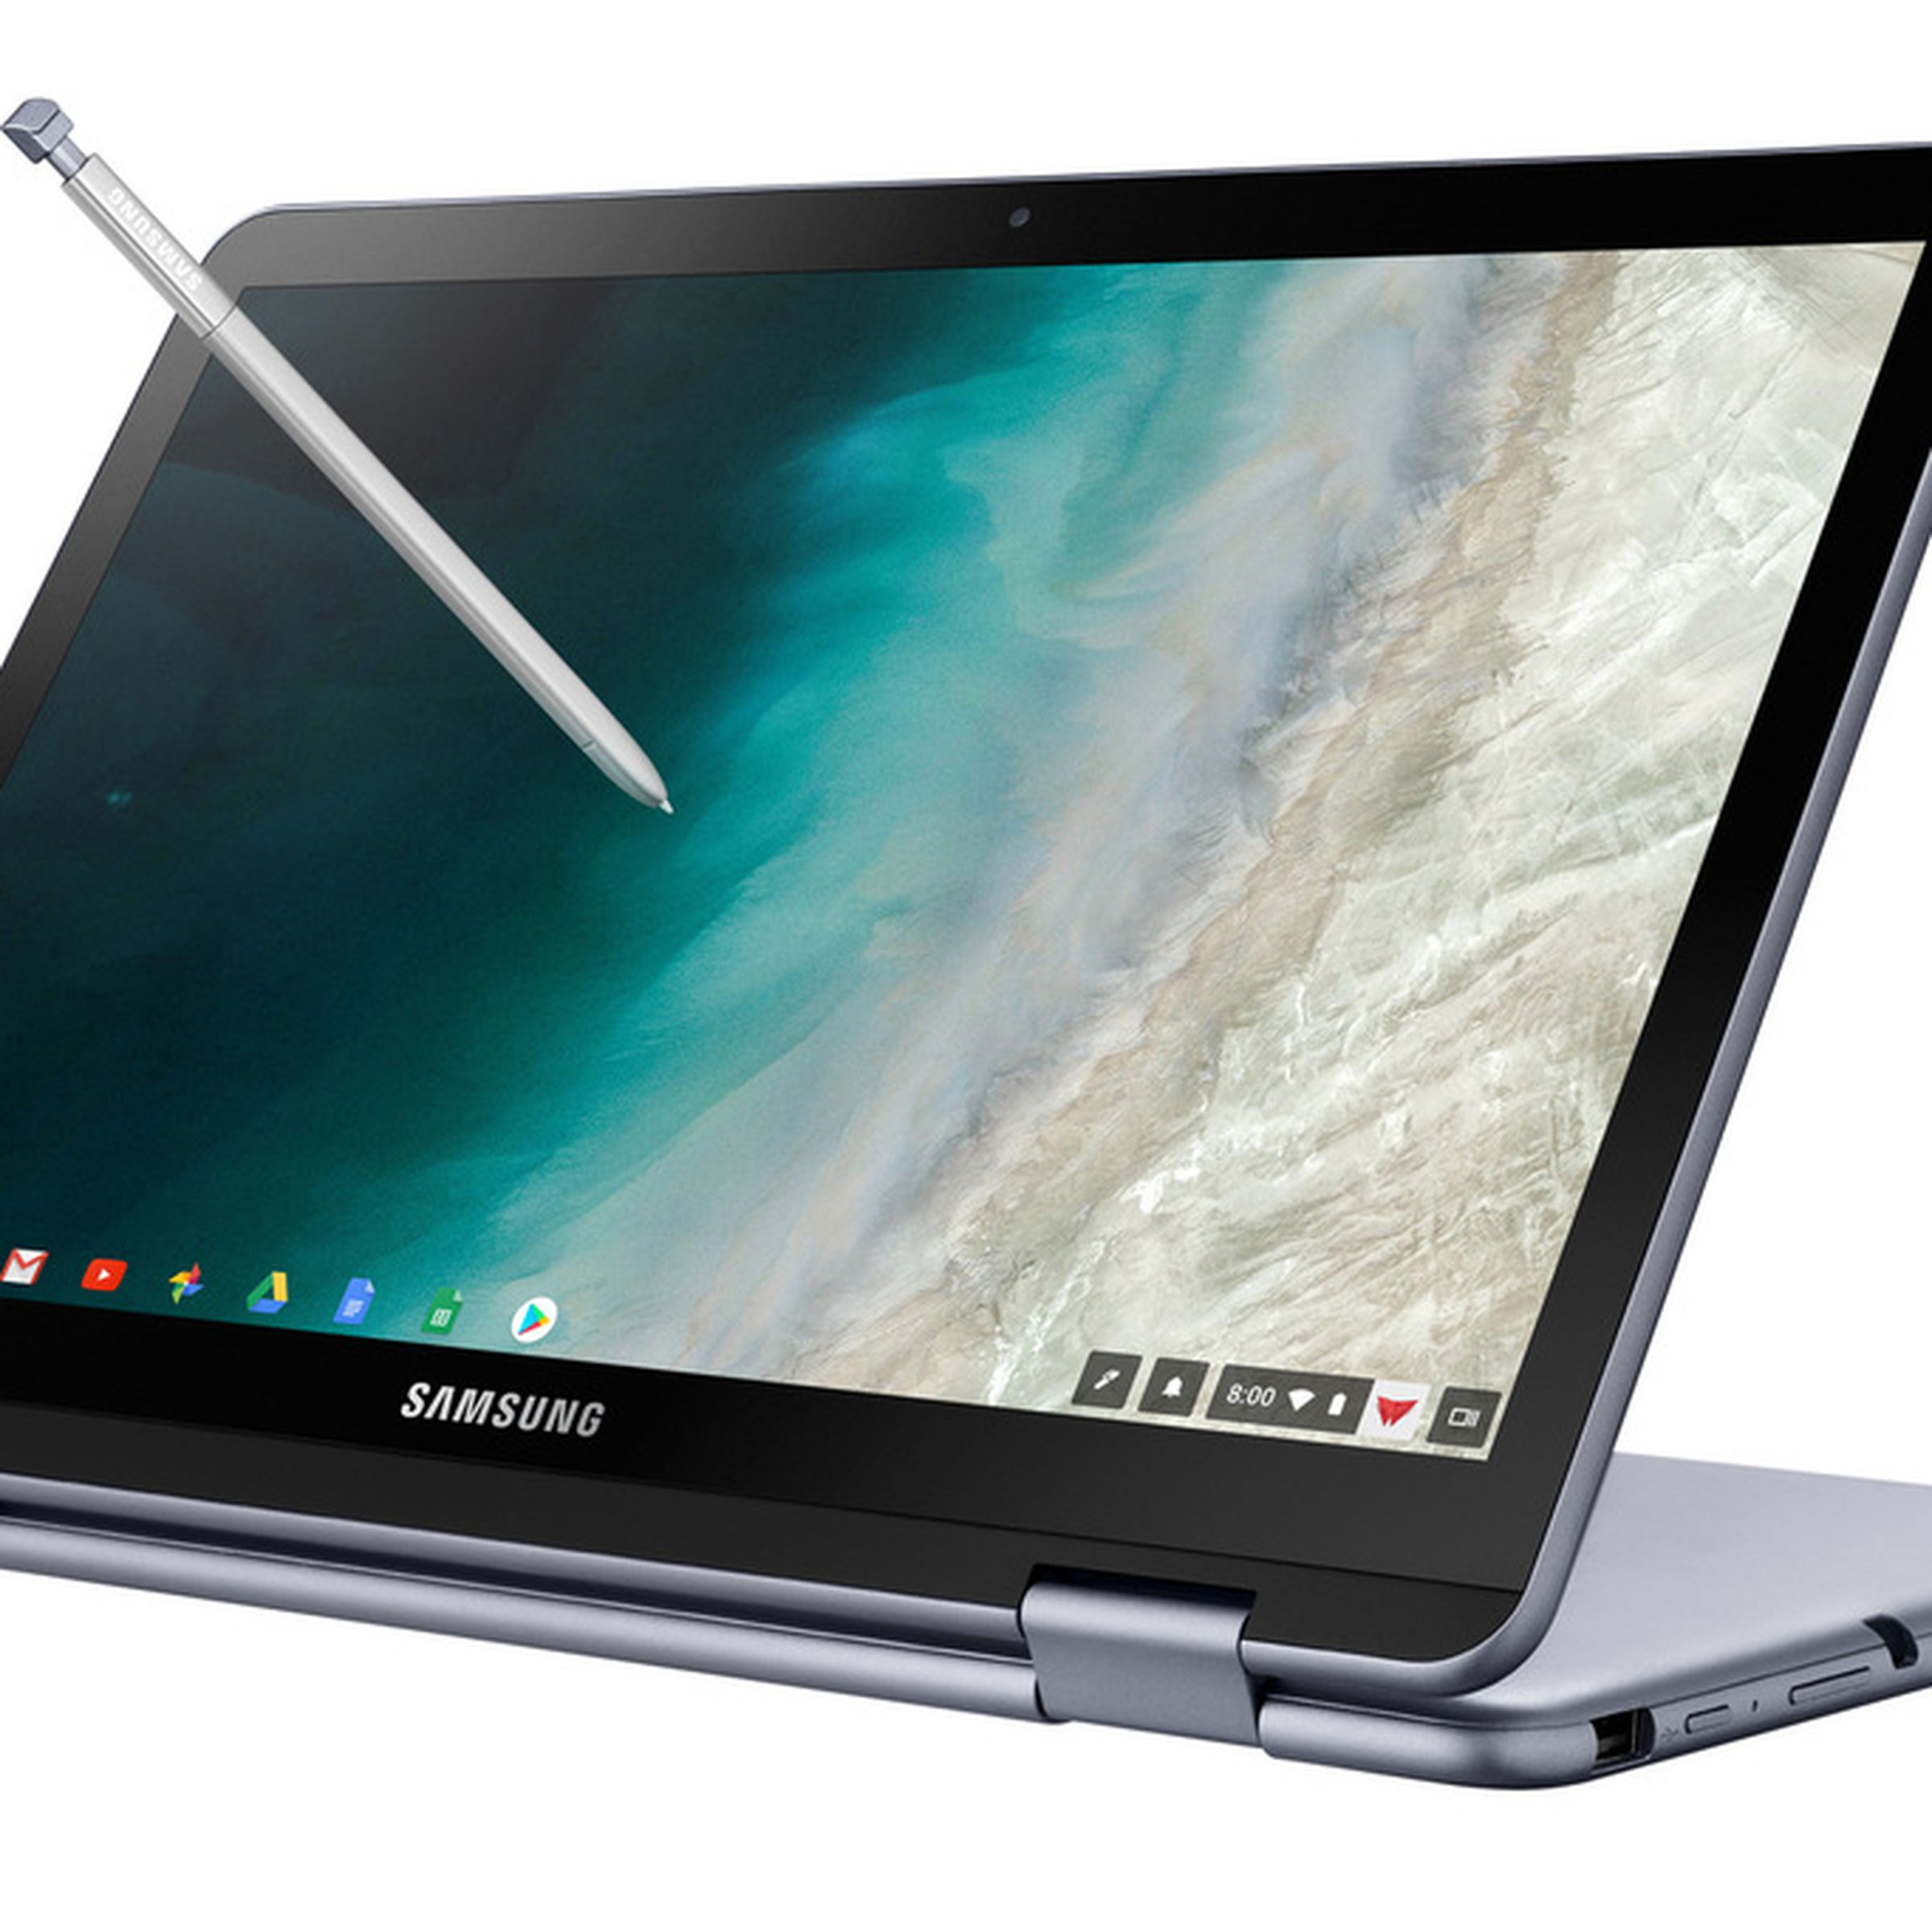 Best Chromebook 2021: Samsung Chromebook Plus v2